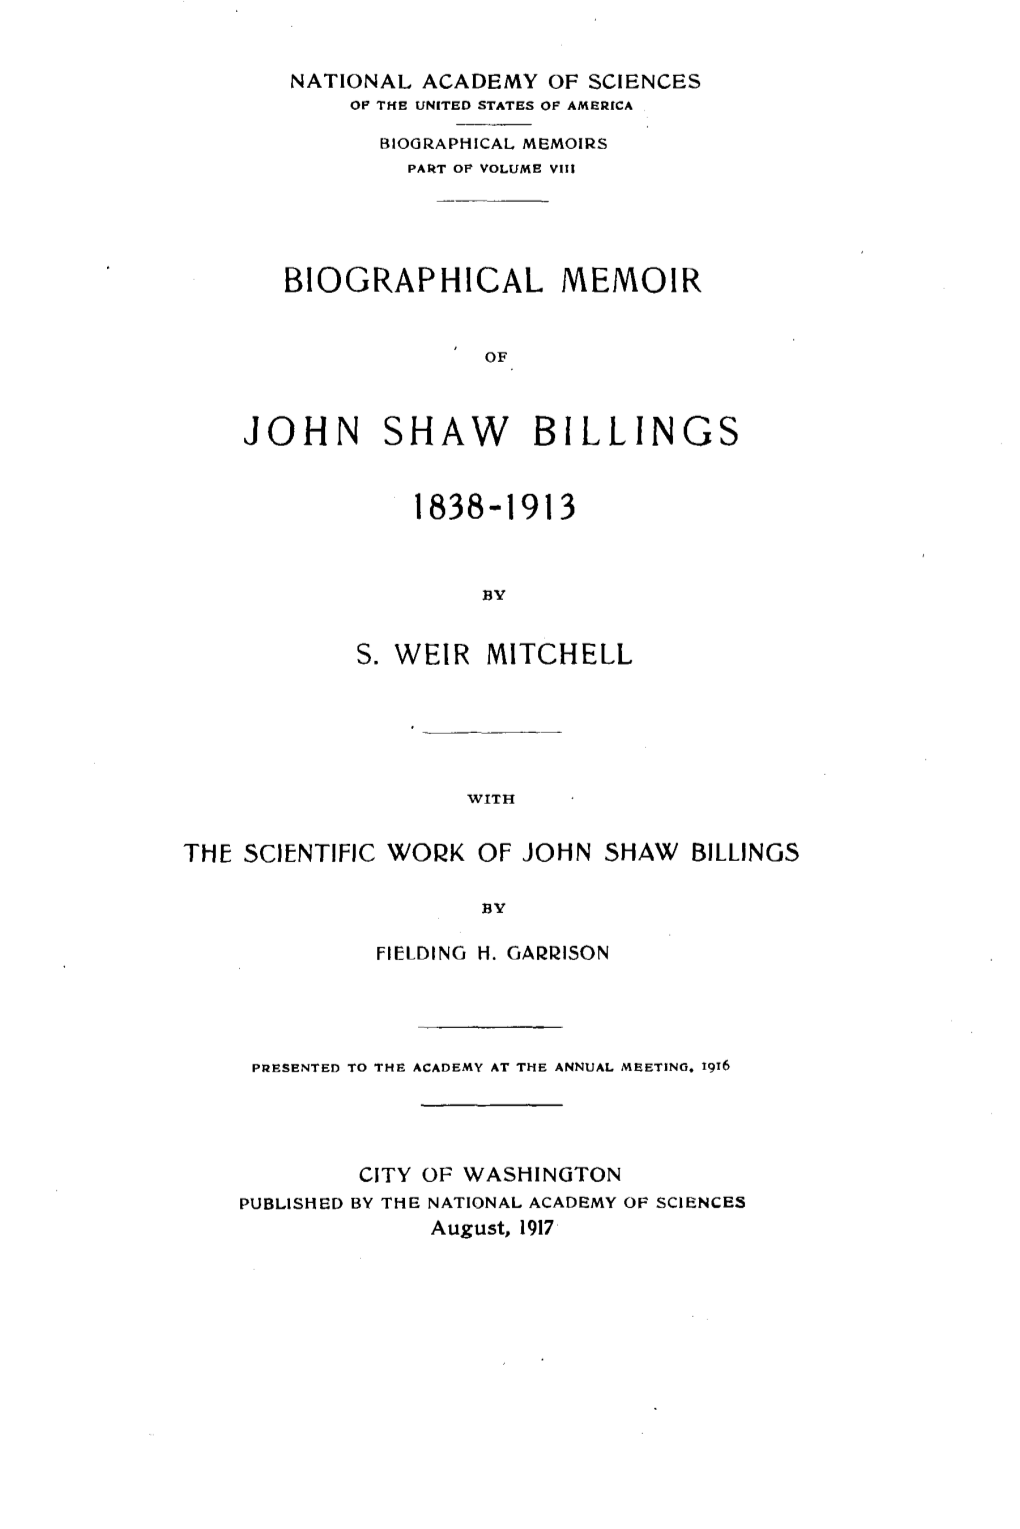 John S. Billings